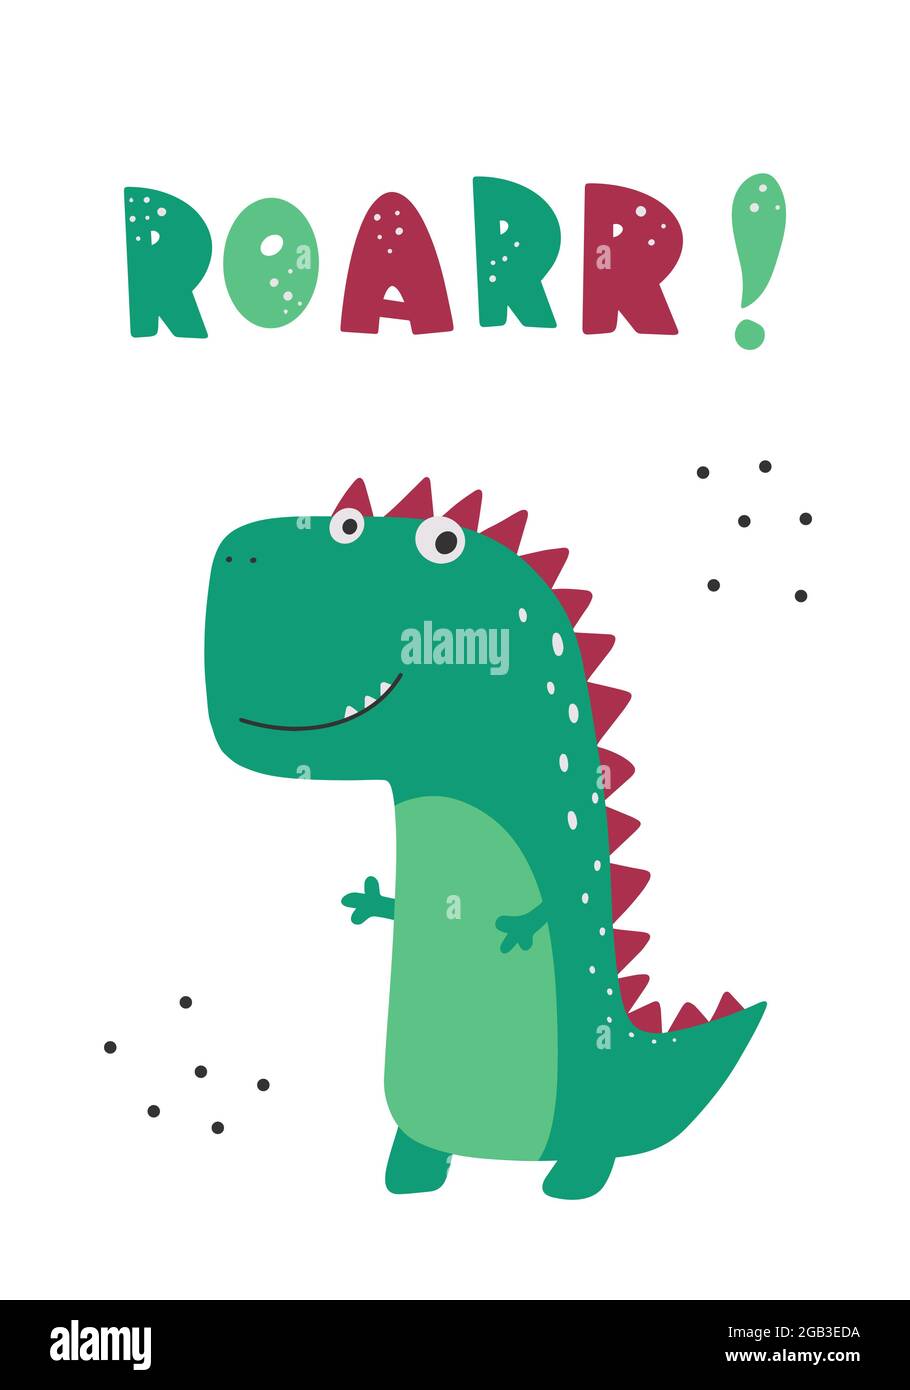 Roar slogan graphic with funny dinosaur cartoons. Stock Vector